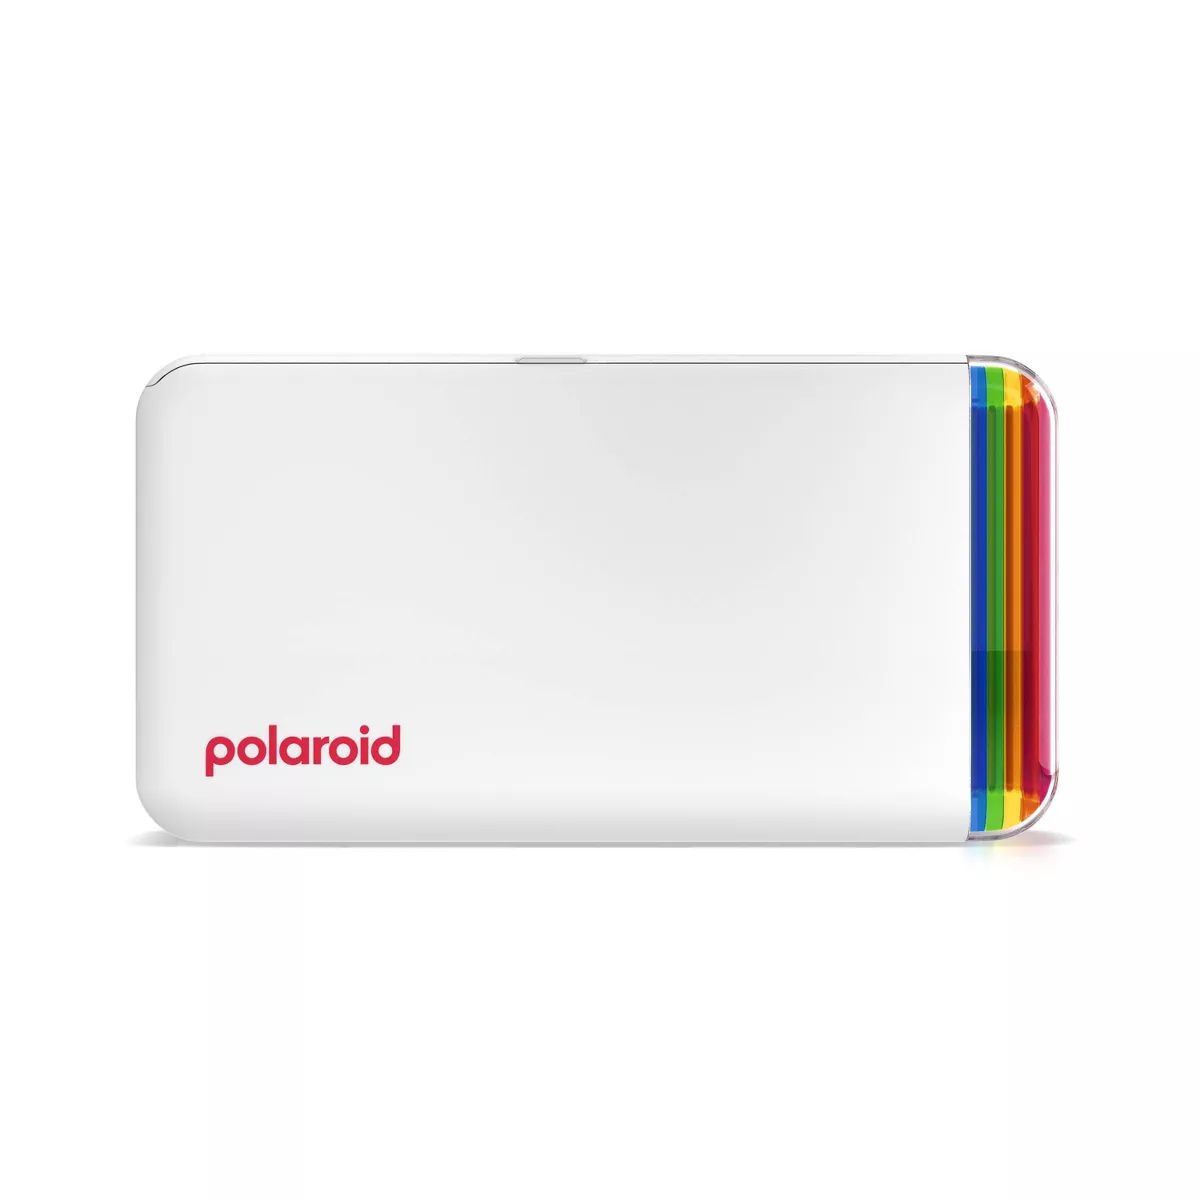 Polaroid Hi-Print Printer | Target